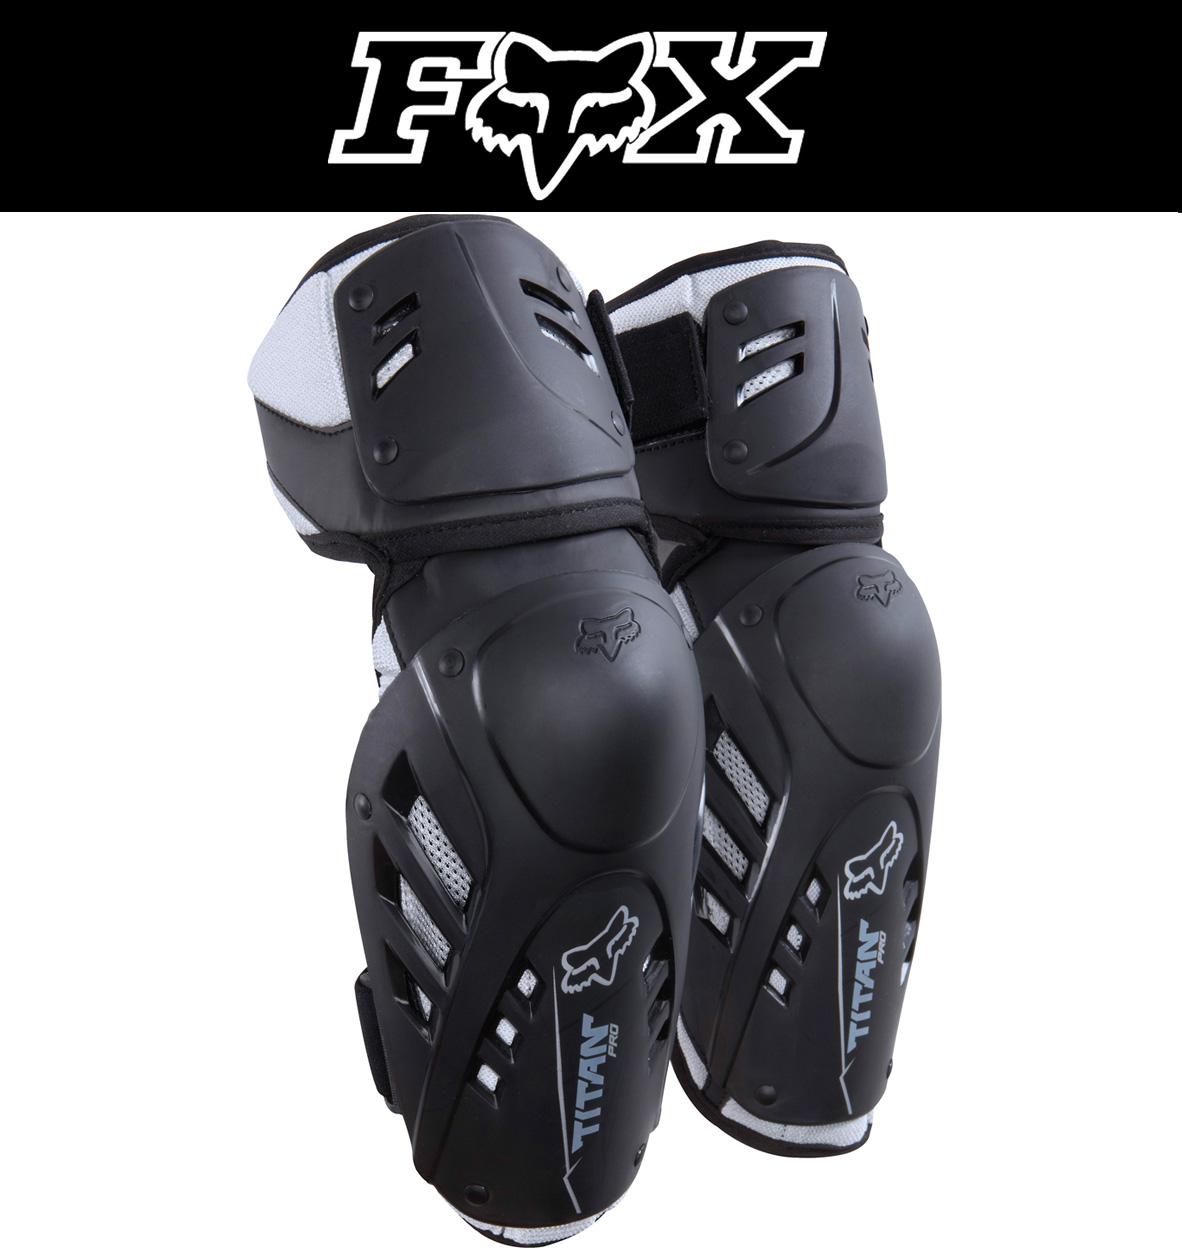 Fox racing titan pro elbow guard black grey dirt bike protection armor mx 2014